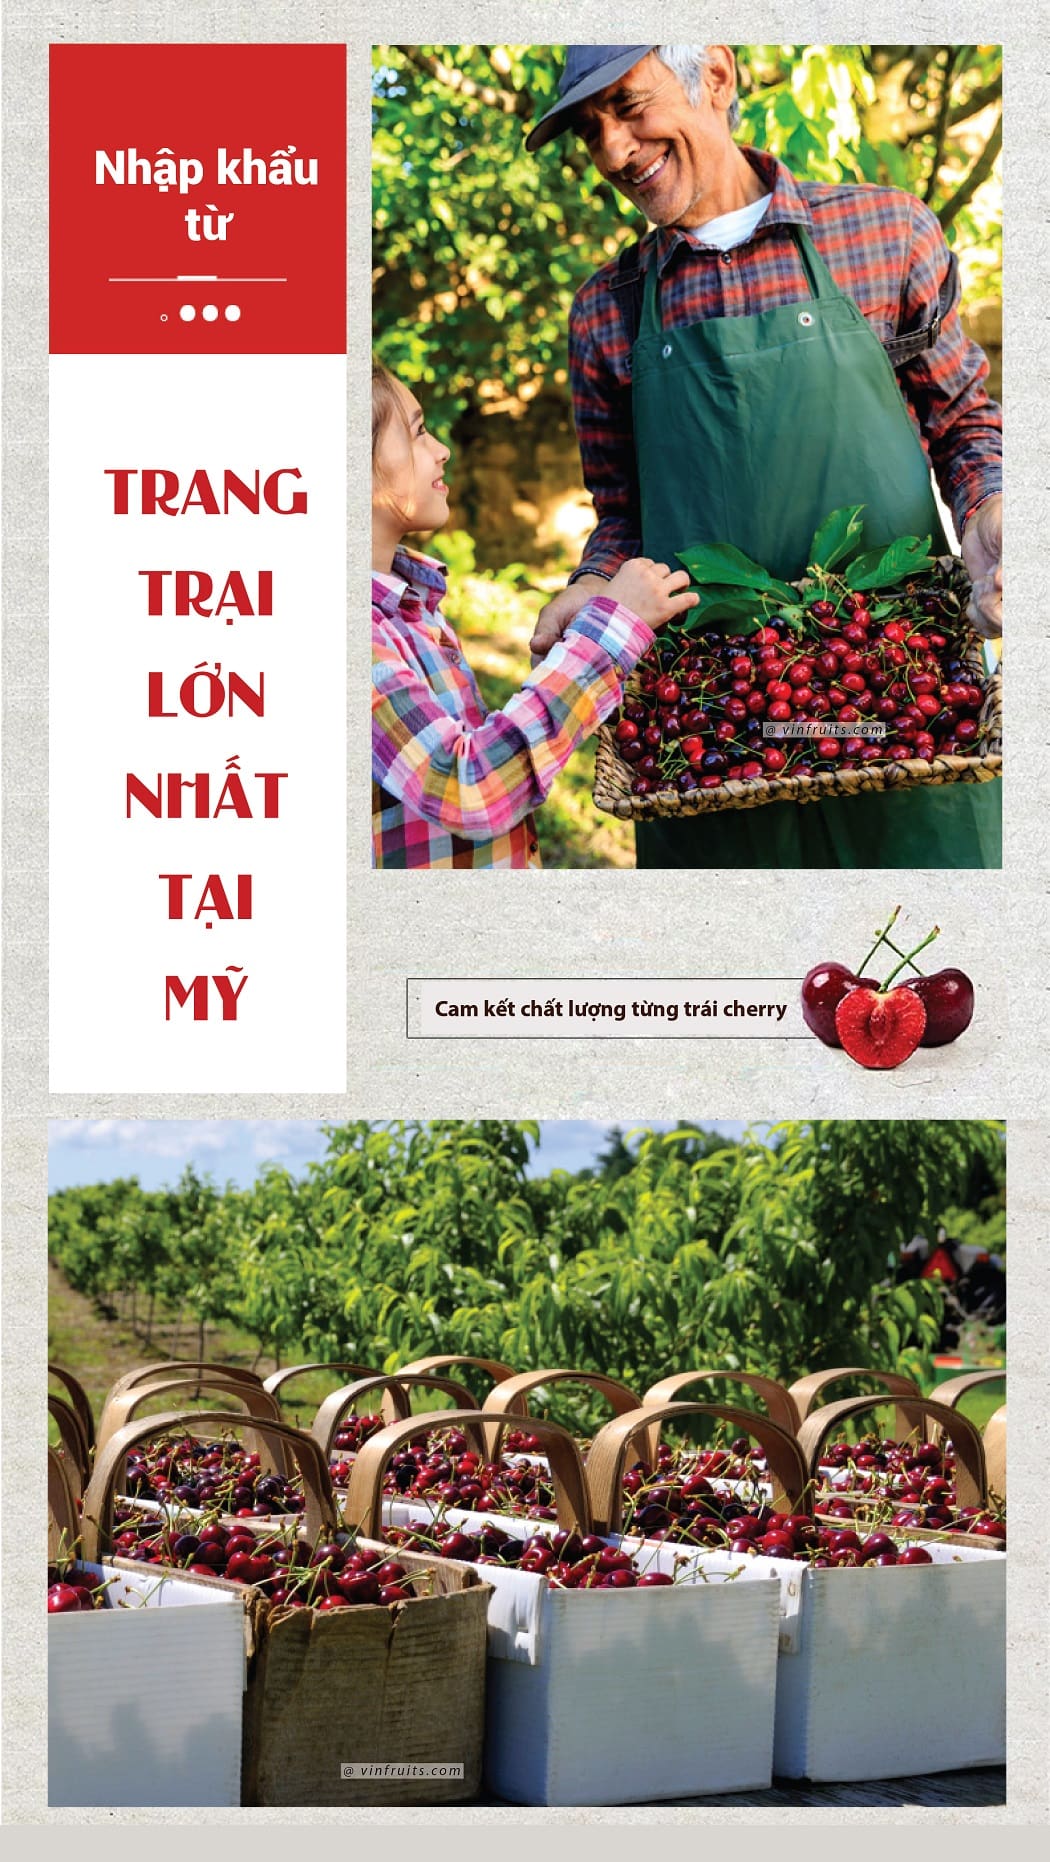 Cam ket chat luong cherry tại vinfruits.com